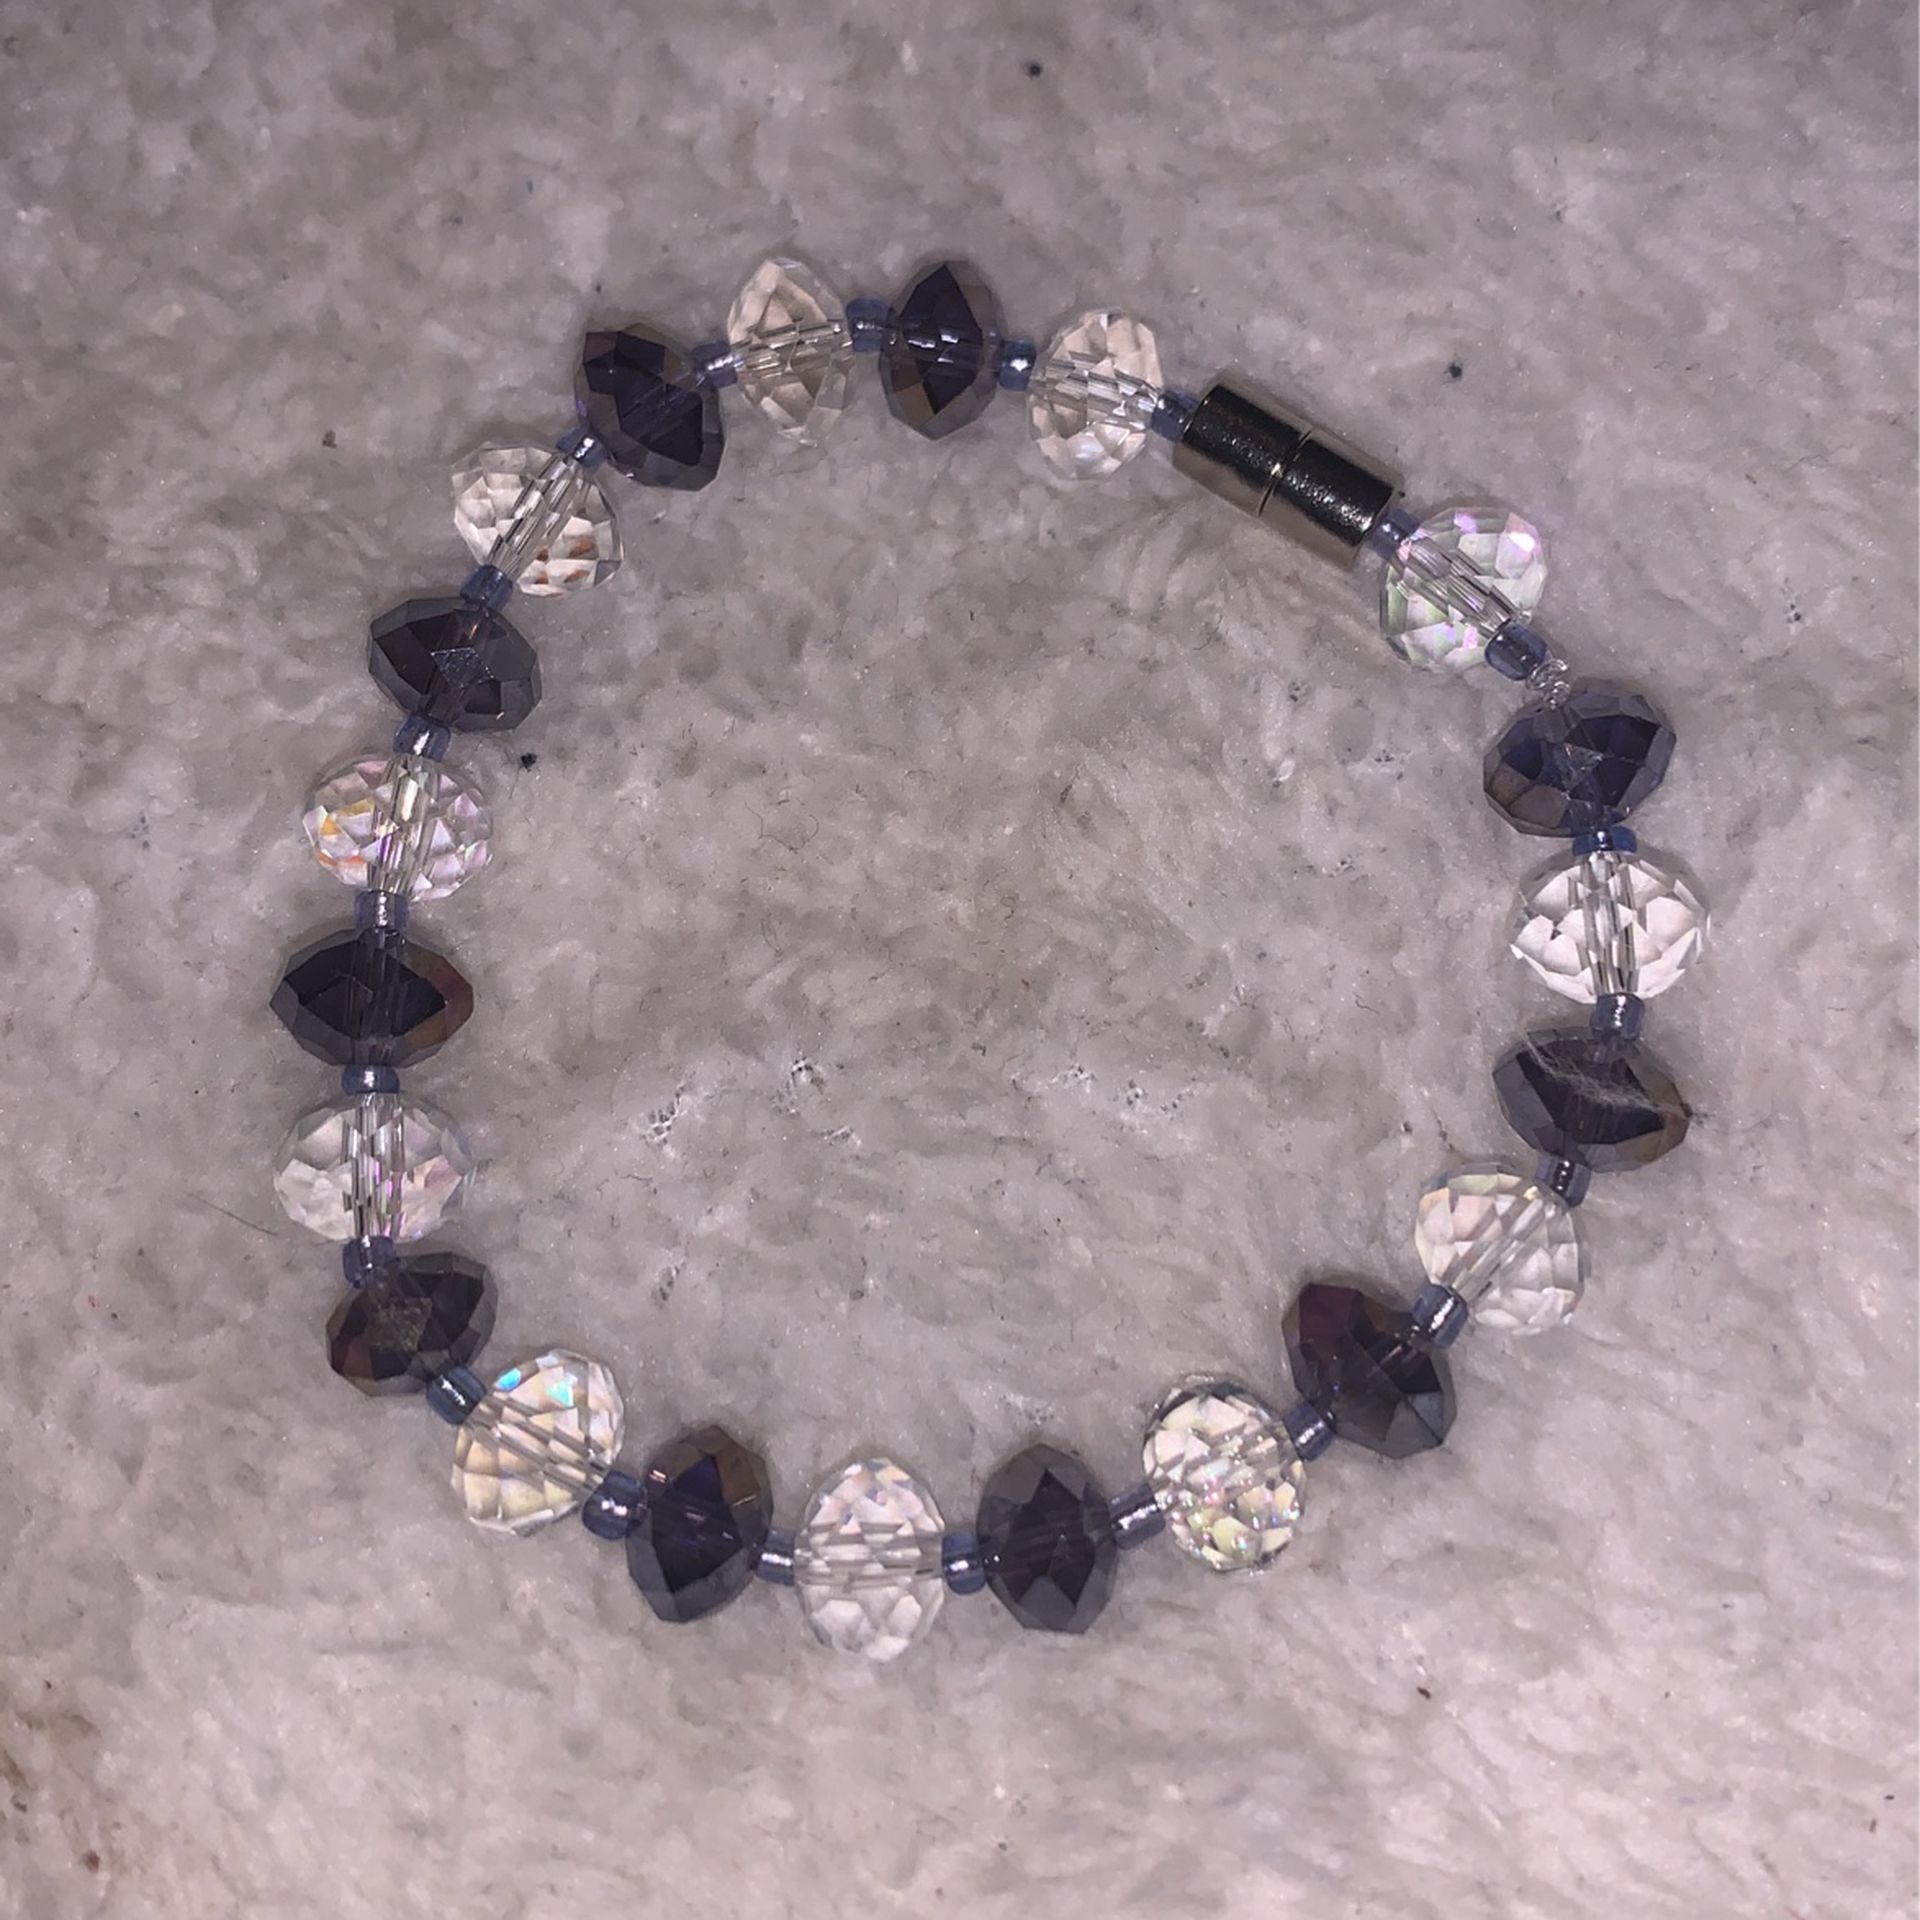 Crystal beads handmade bracelets